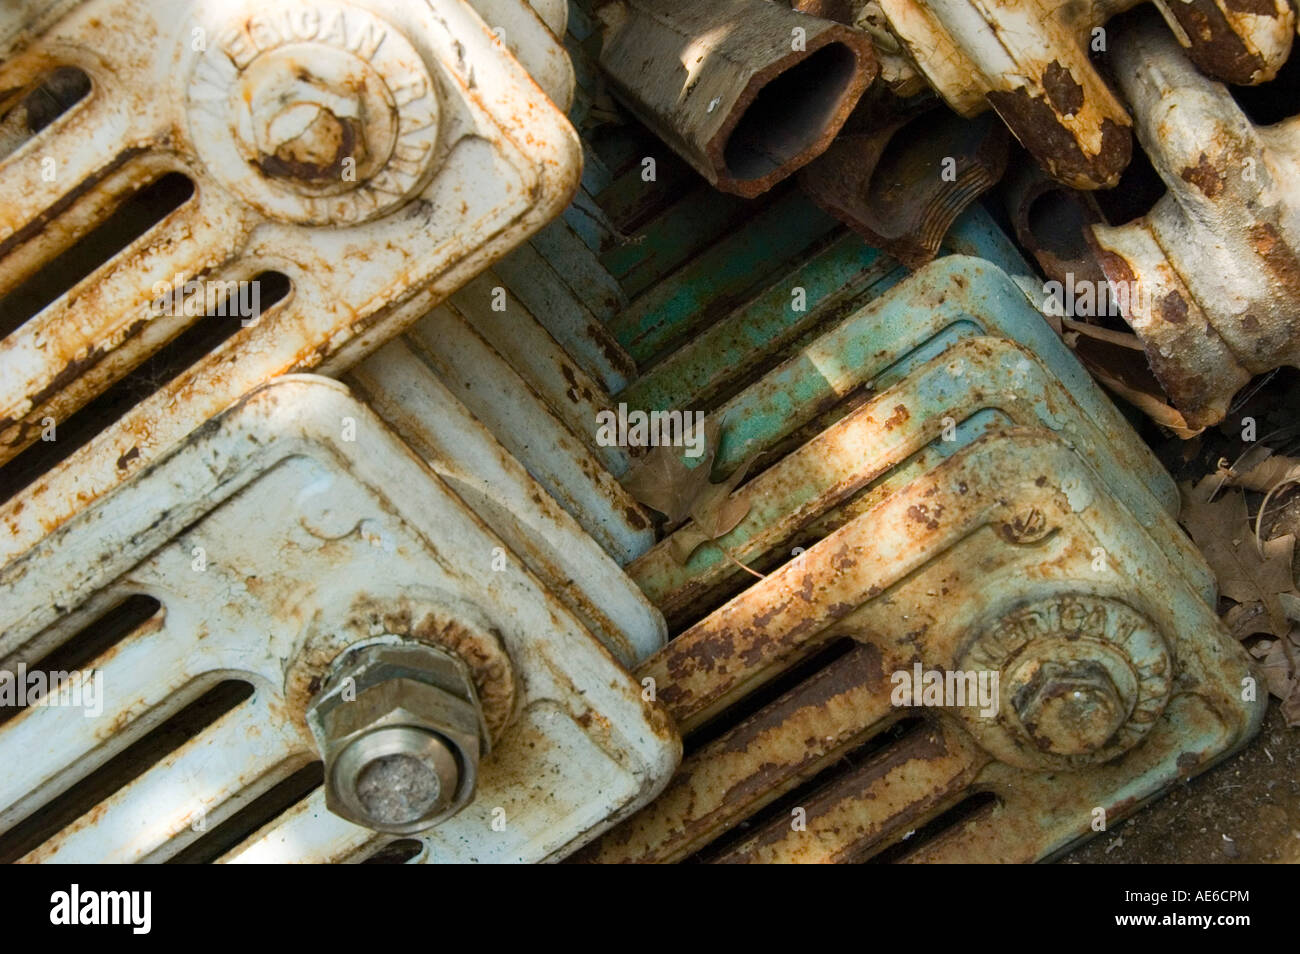 Rusting radiators in a pile Stock Photo